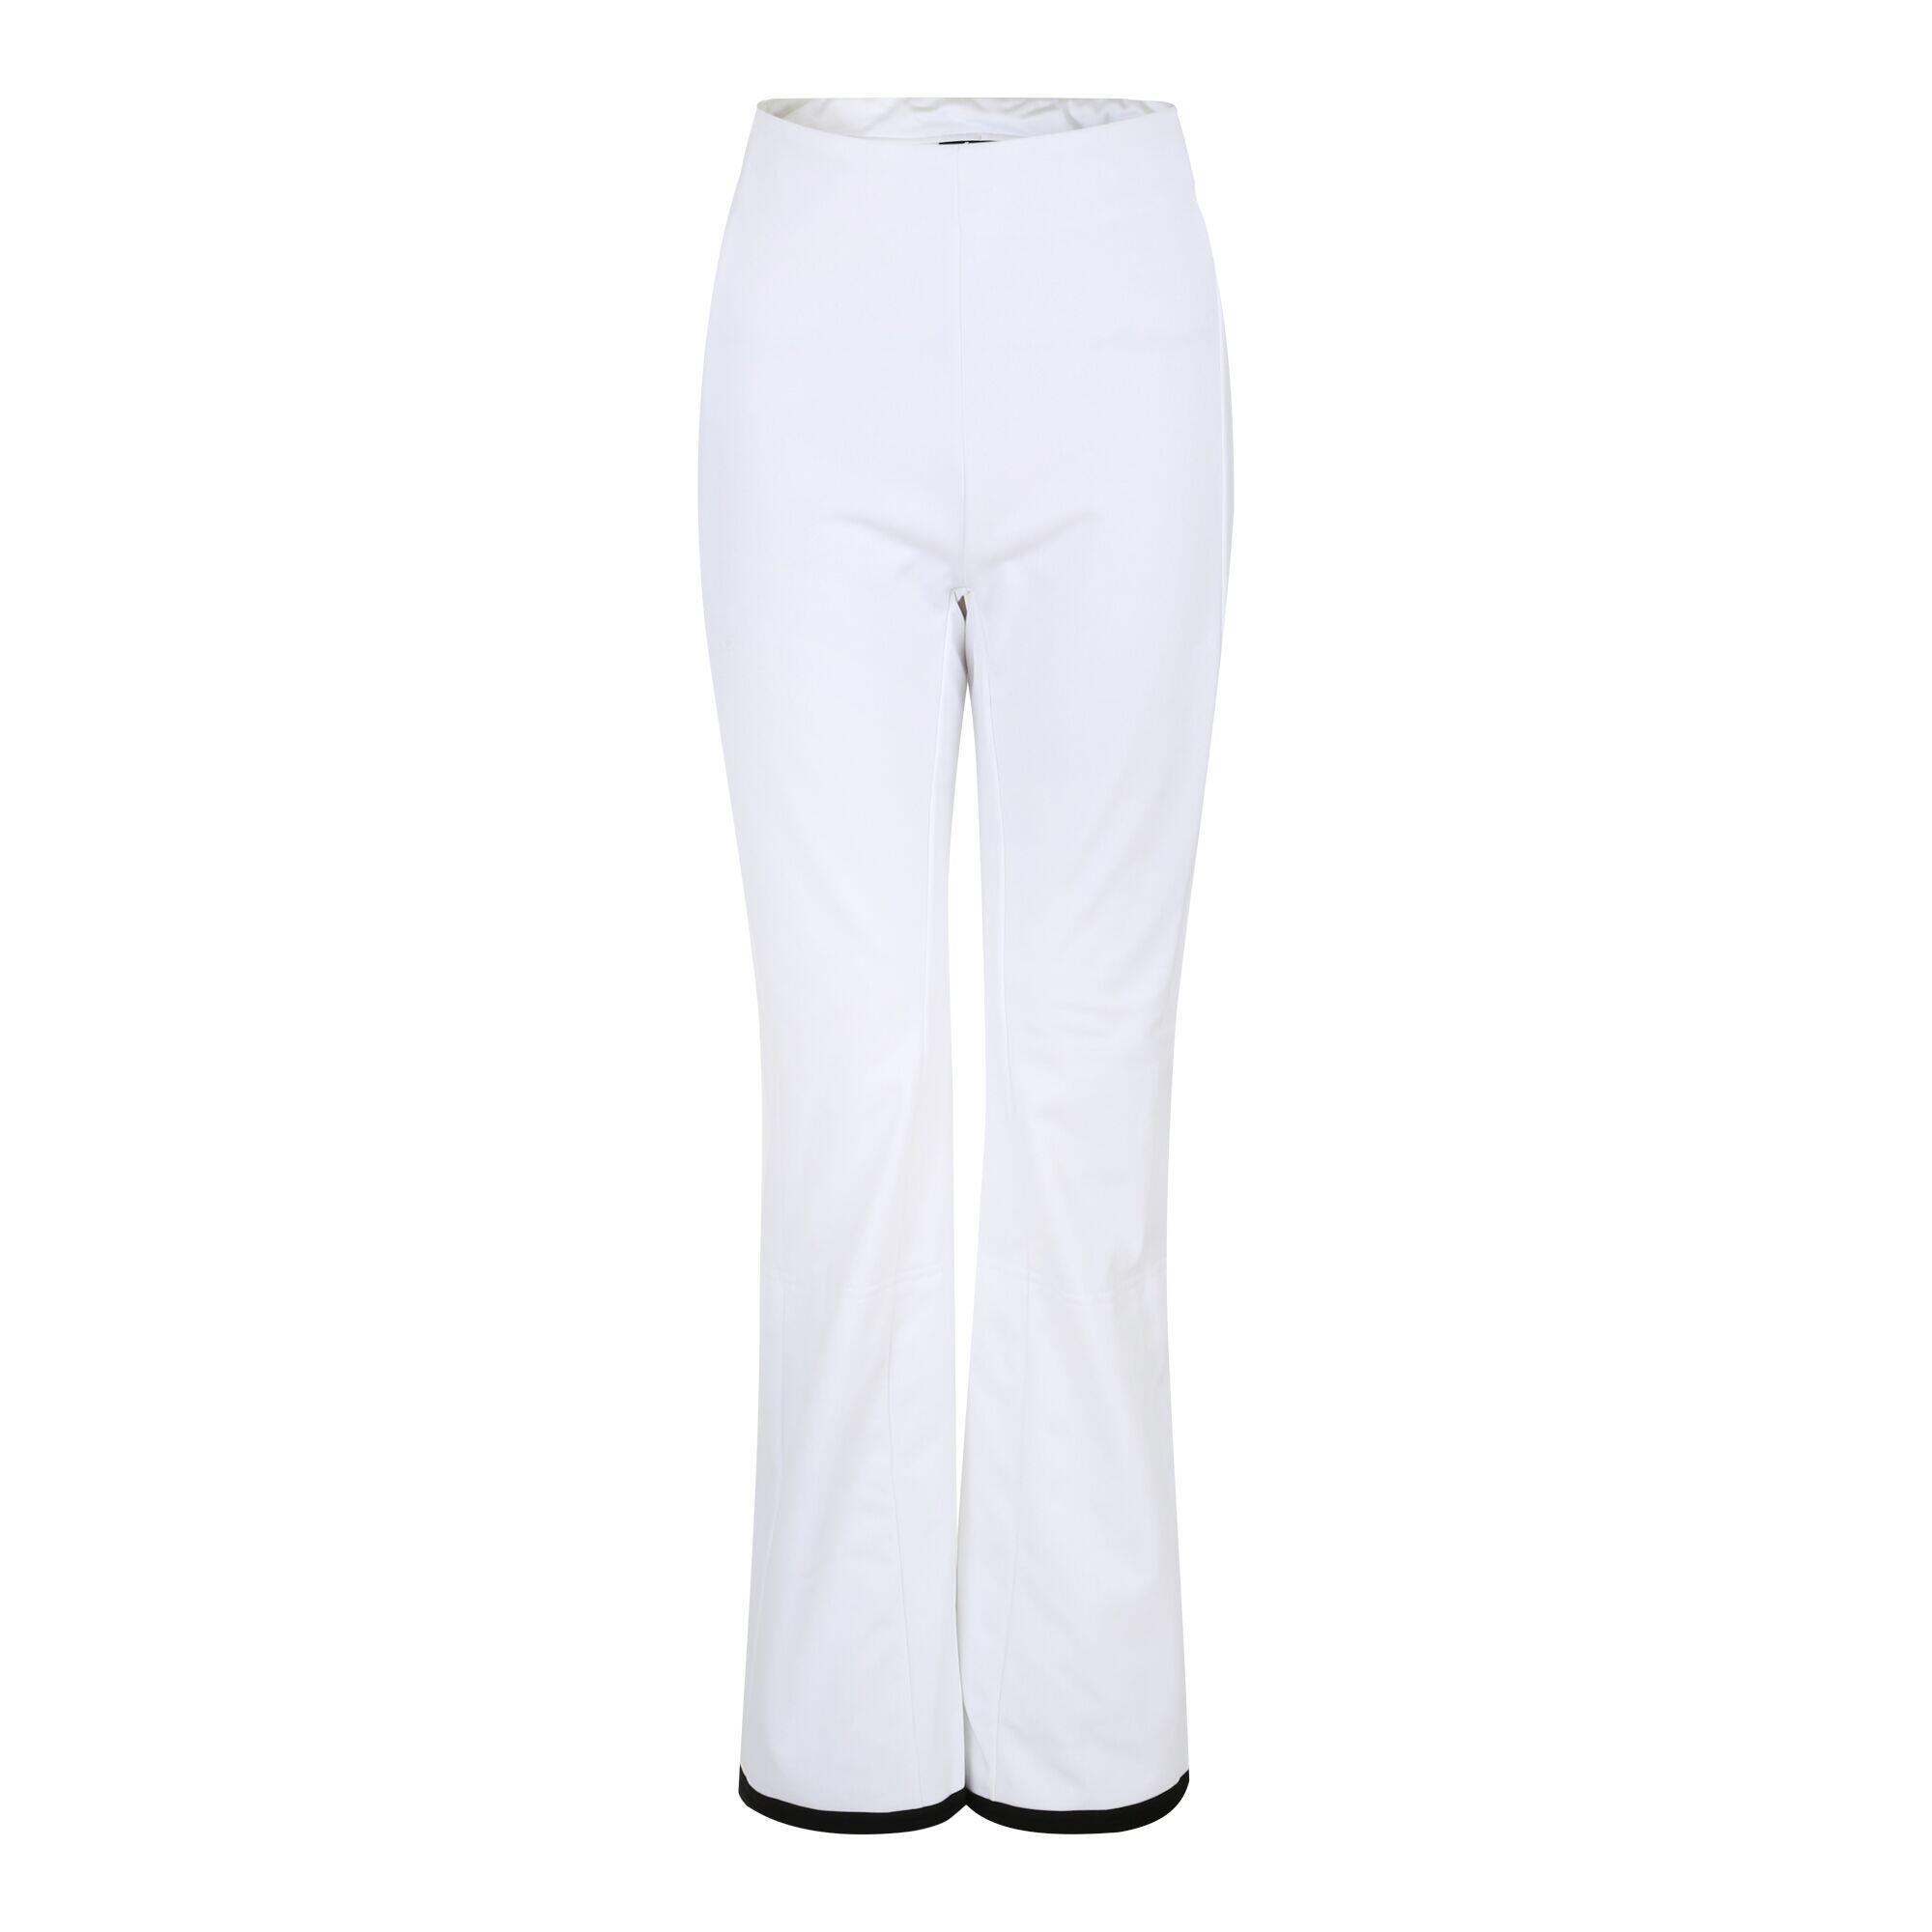 Womens/Ladies Upshill Ski Trousers (White) 1/4